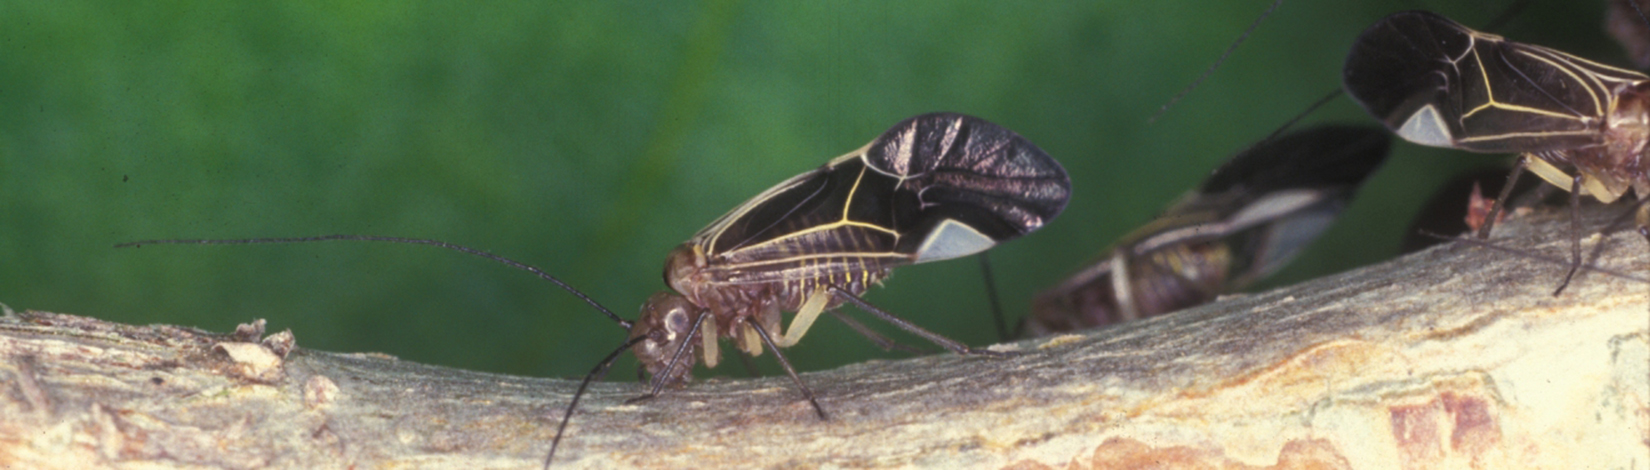 a photo of Cerastipsocus venosus4 by Castner